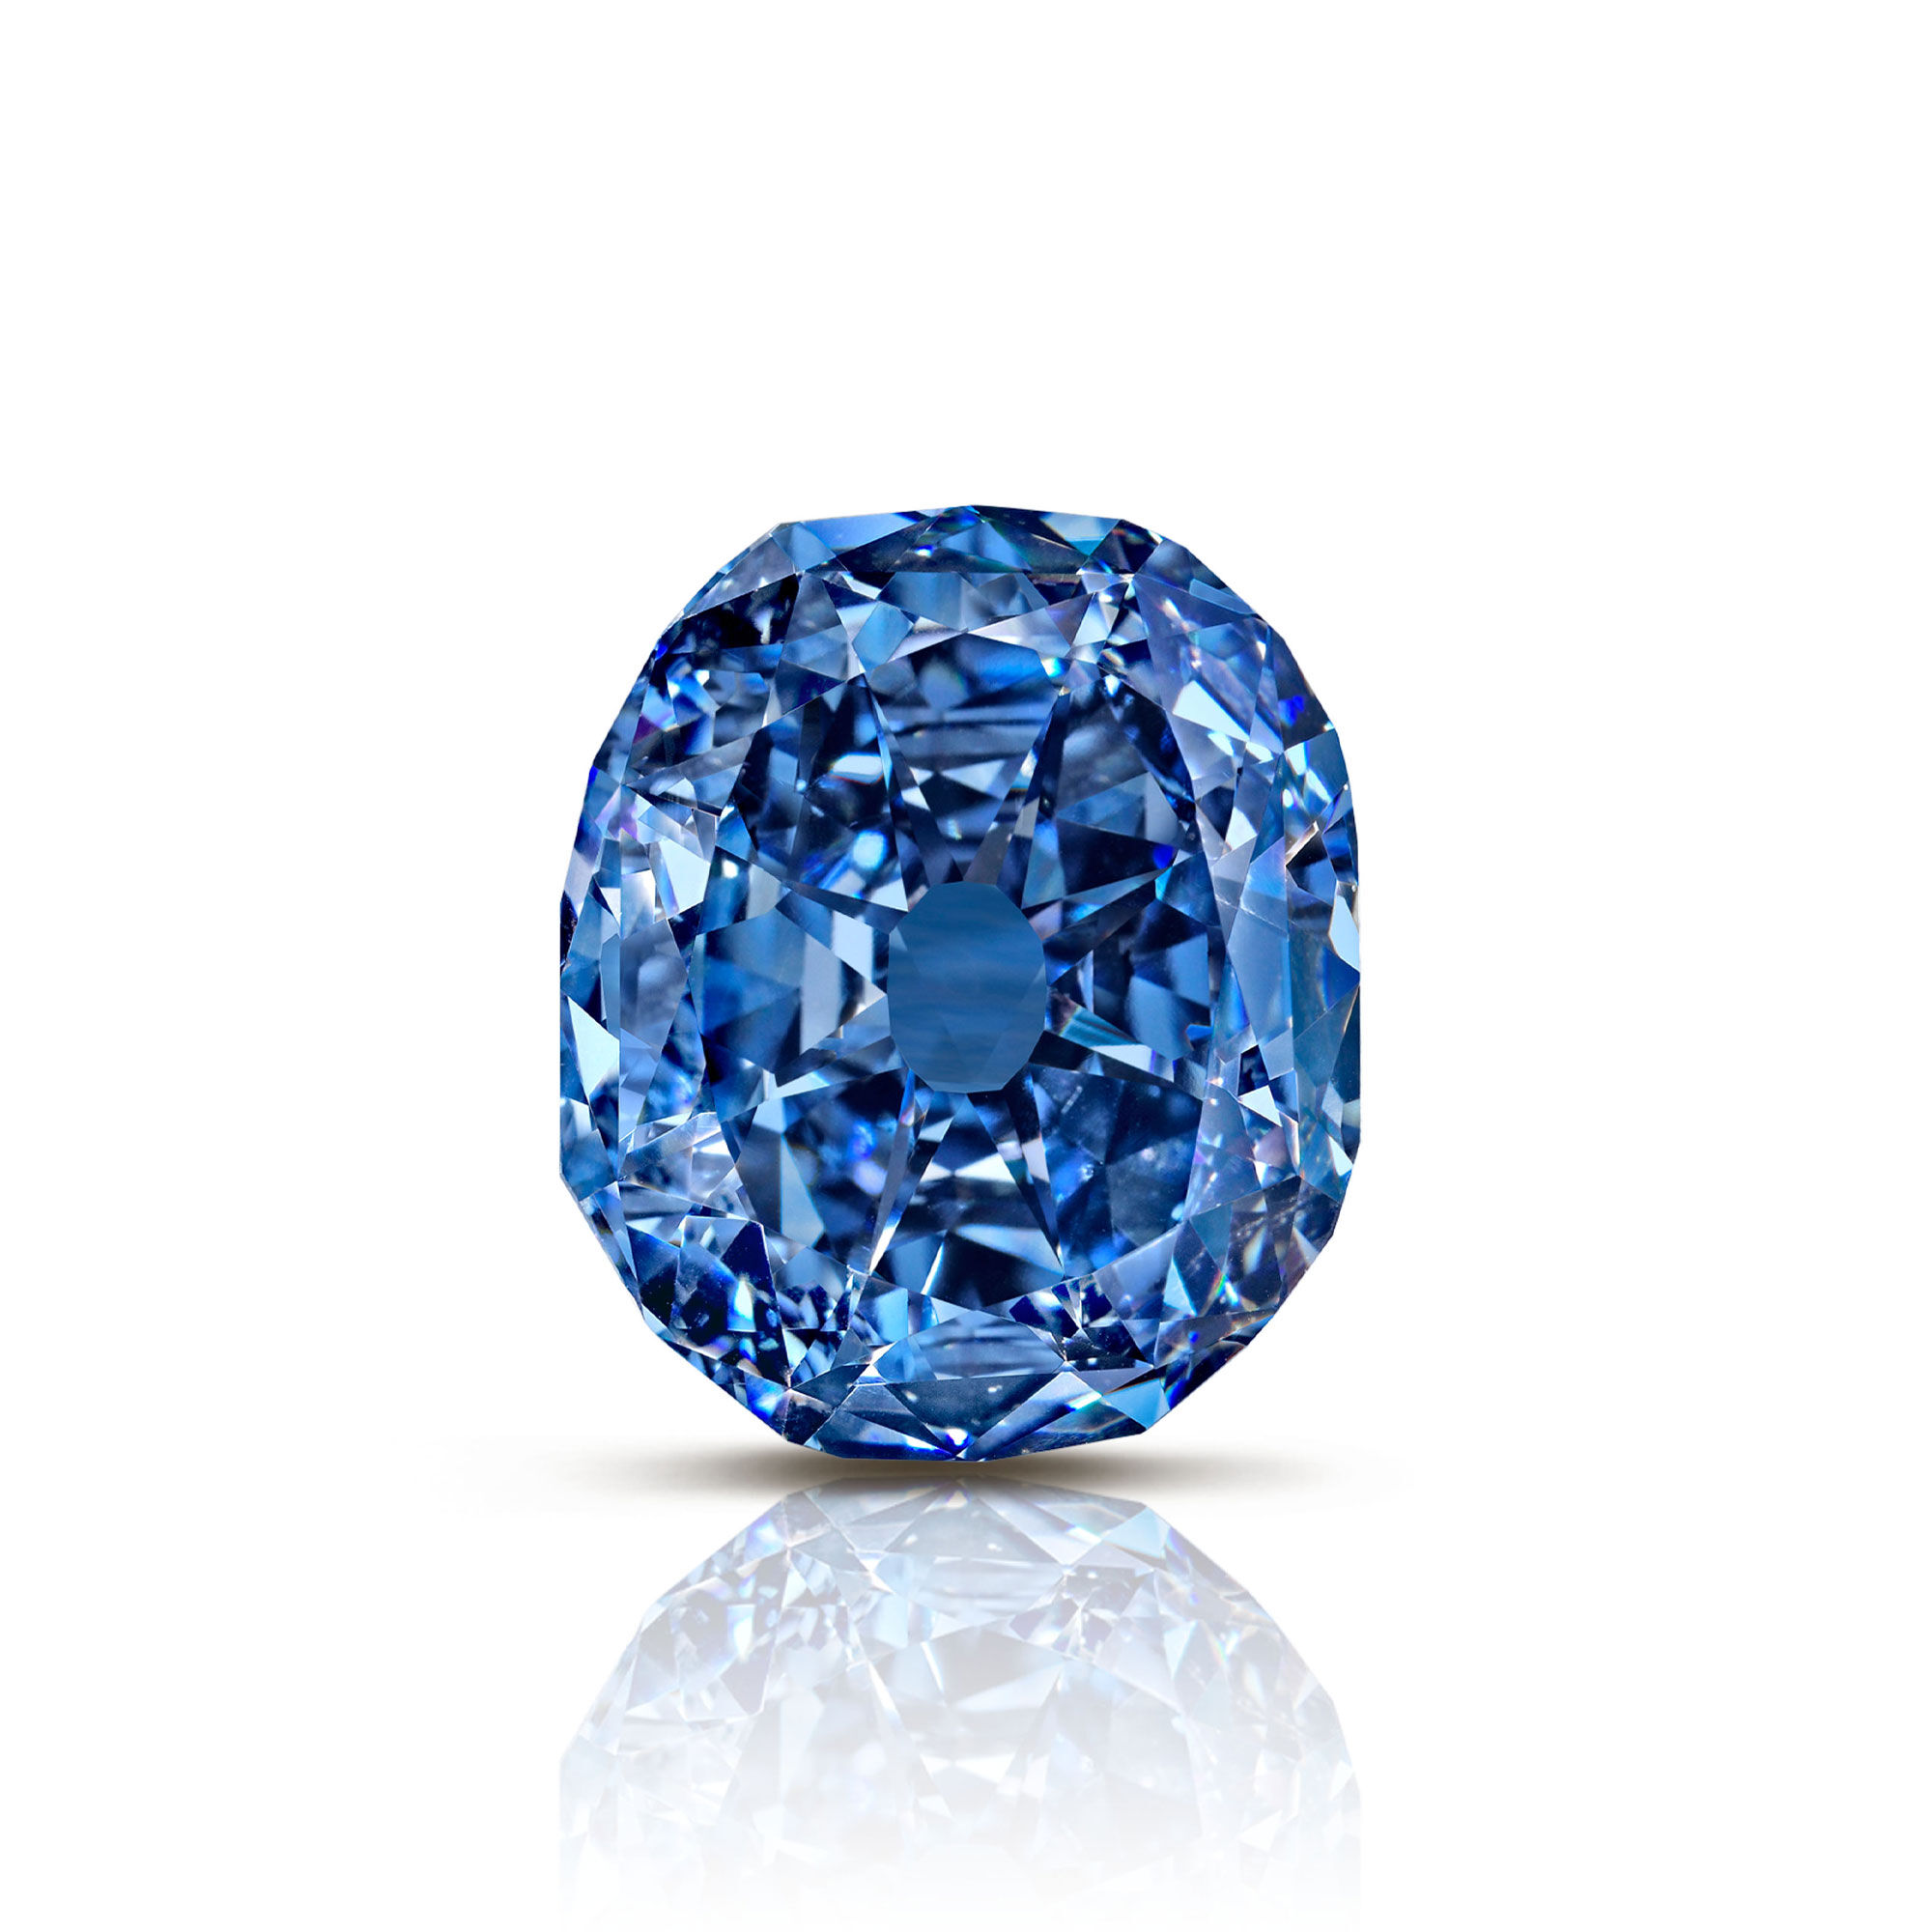 The Wittlesbach-Graff blue diamond